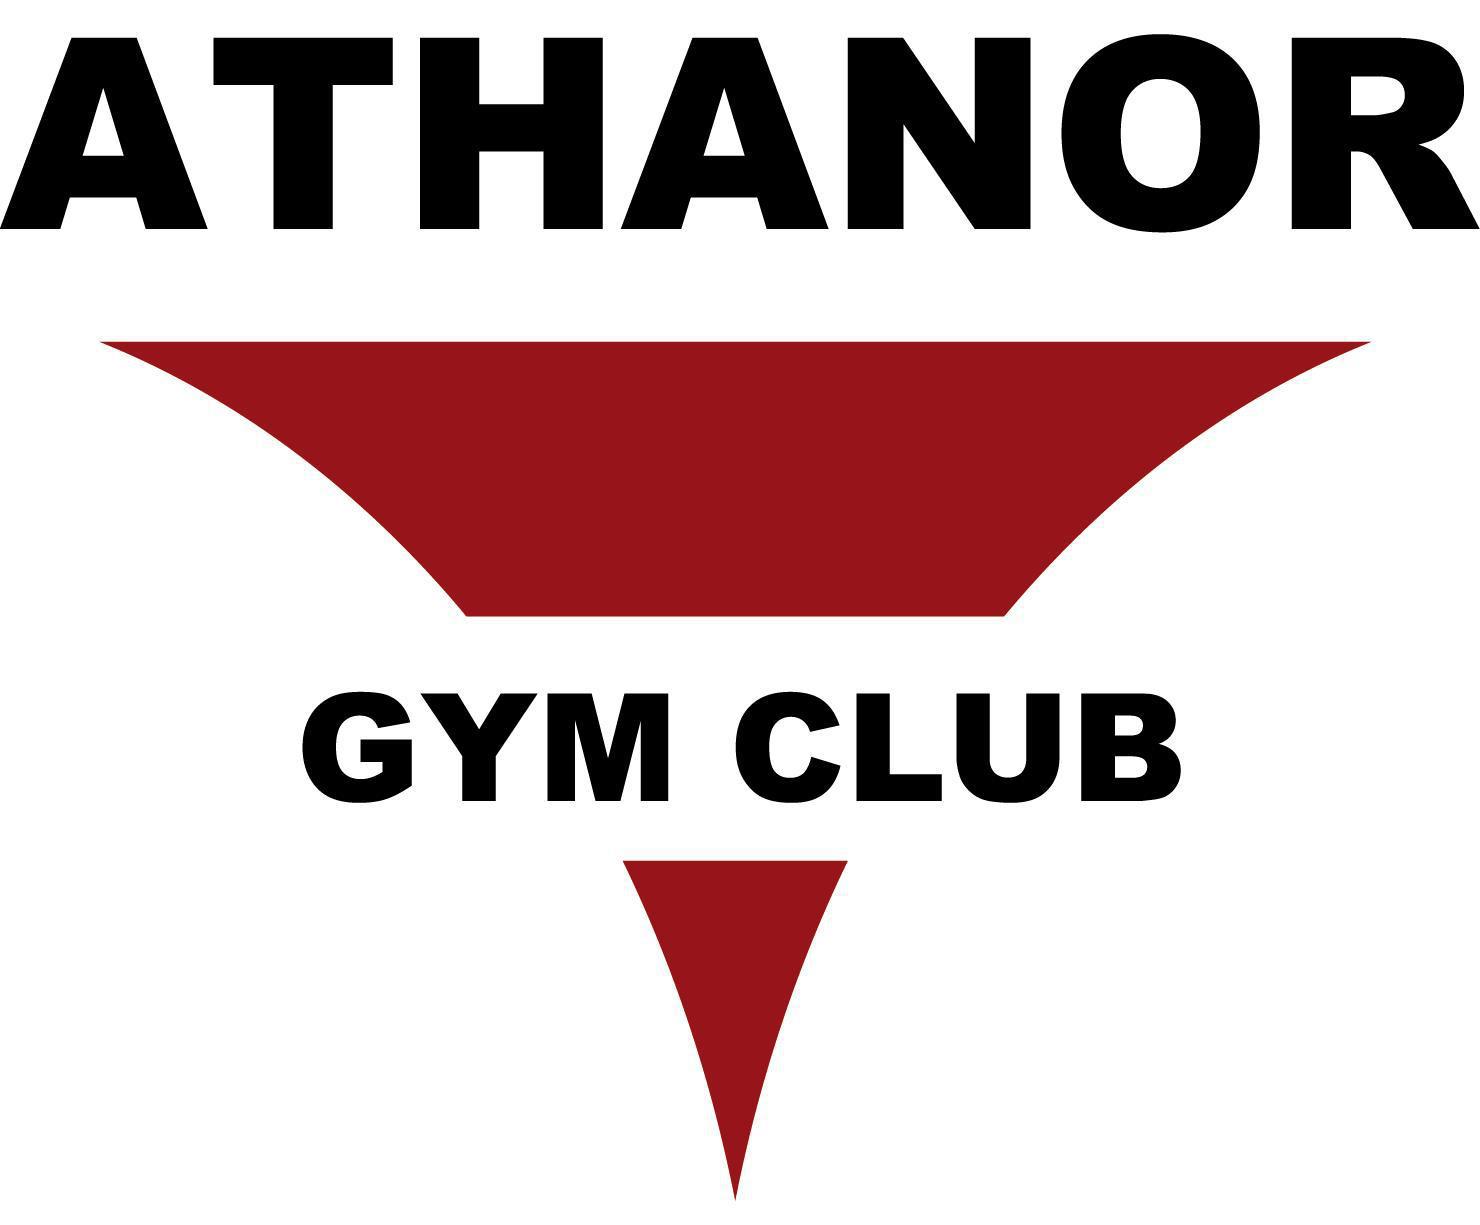 Athanor Gym Club